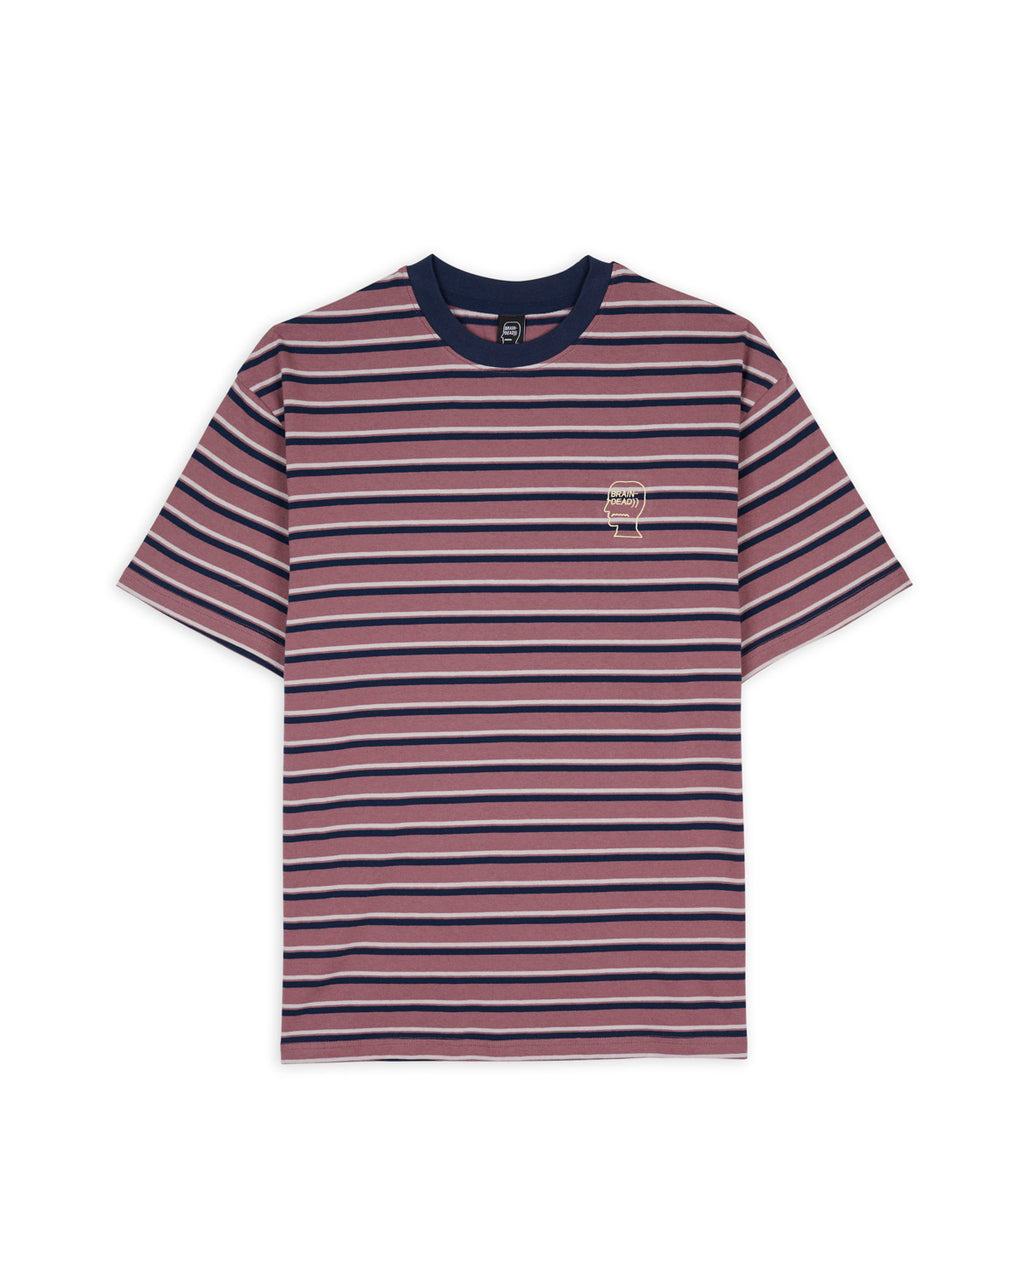 94 Striped T-Shirt - Dusty Rose Multi 1